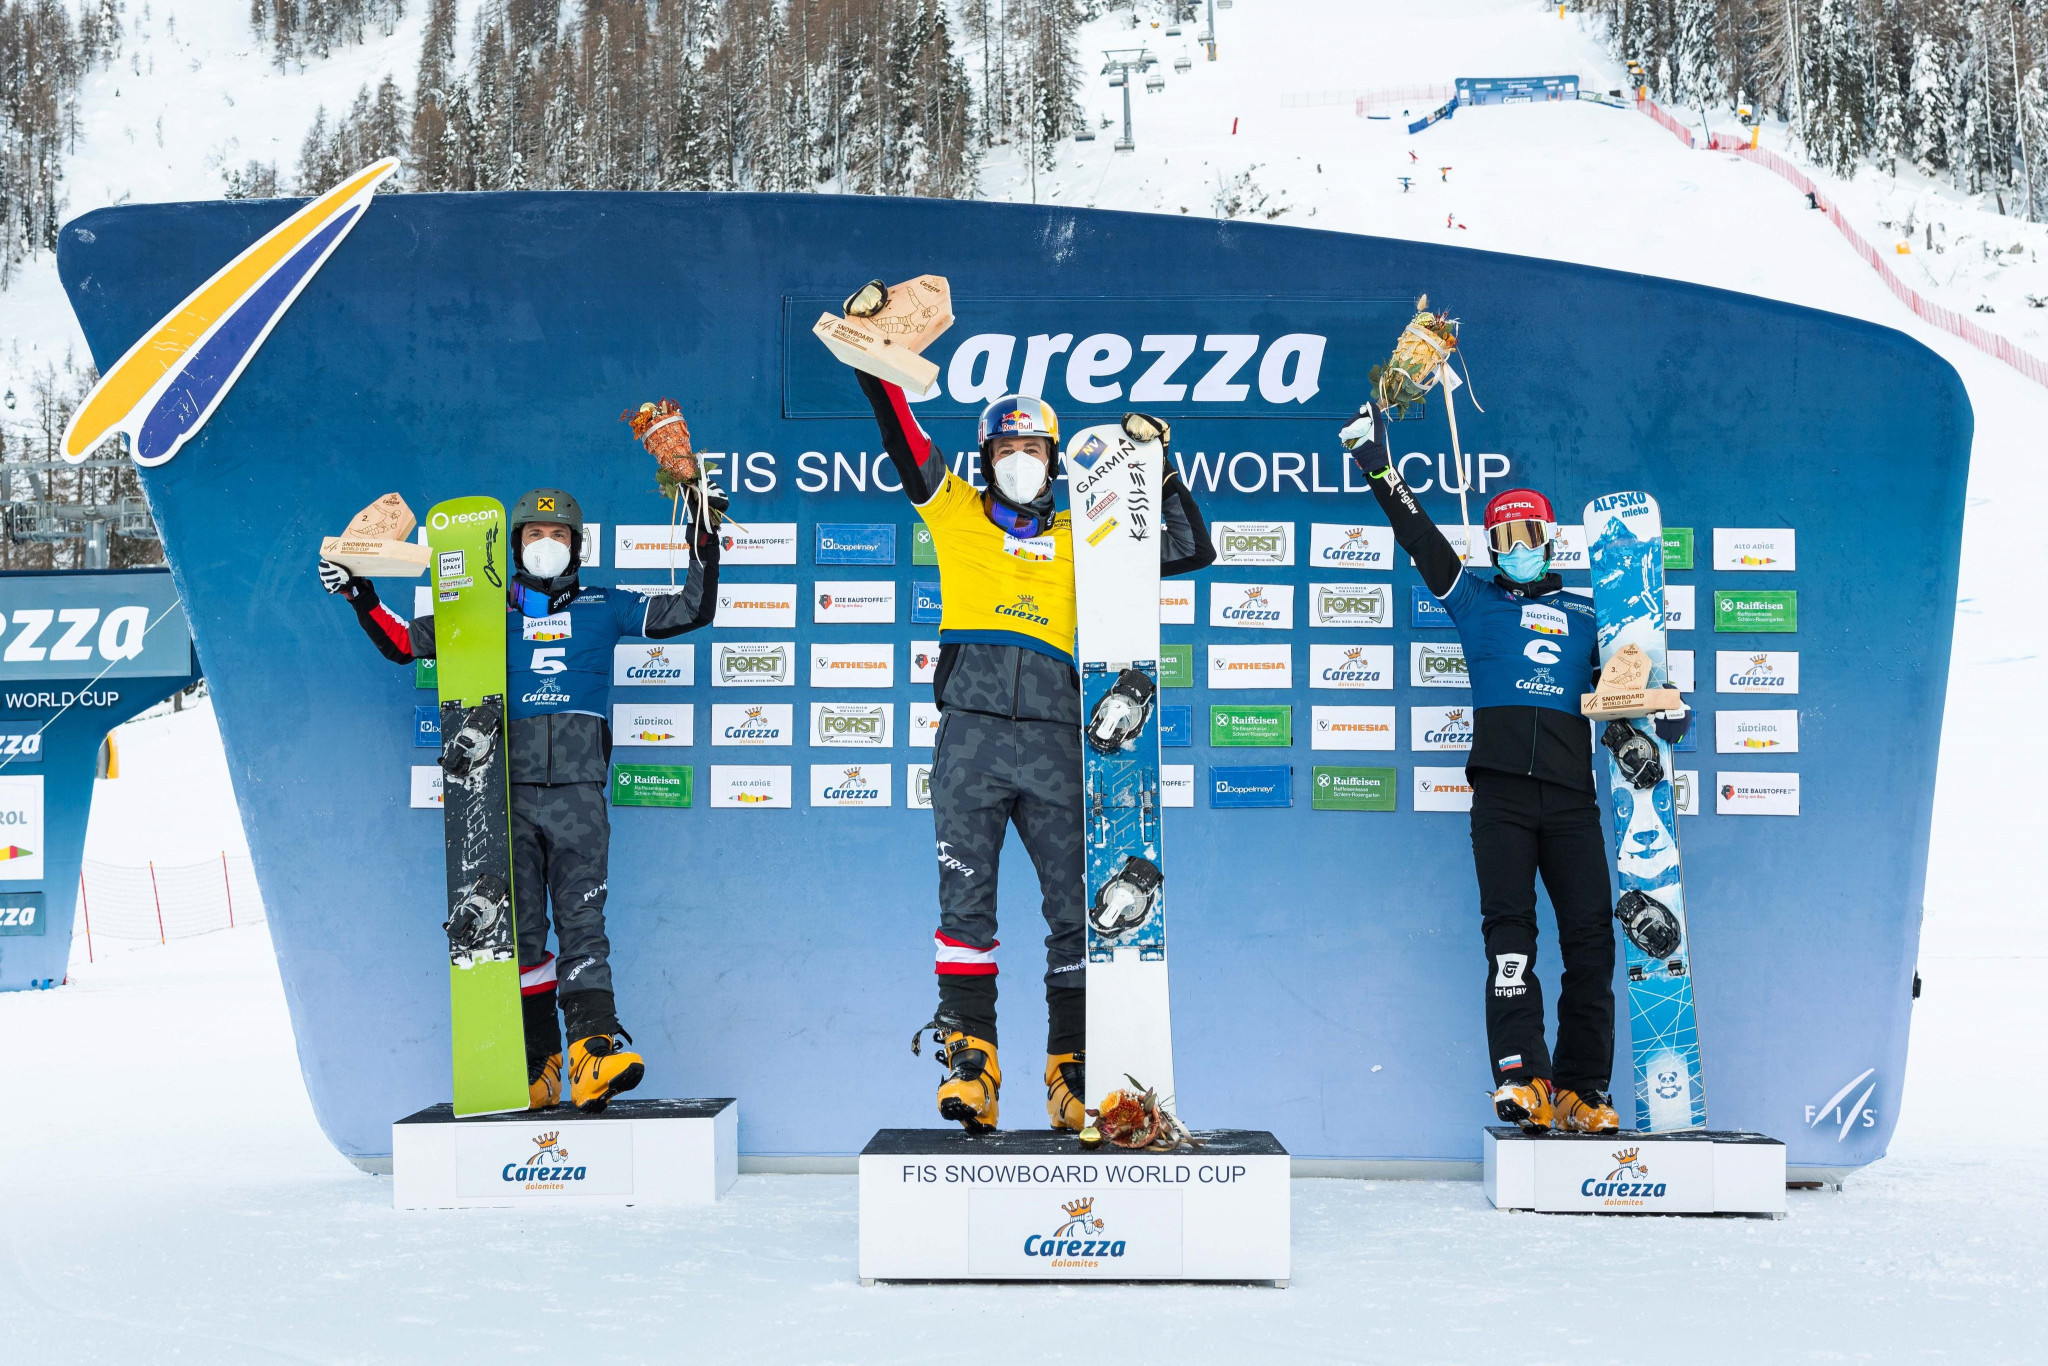 Karl edges Prommegger in all-Austrian parallel giant slalom final in Italy